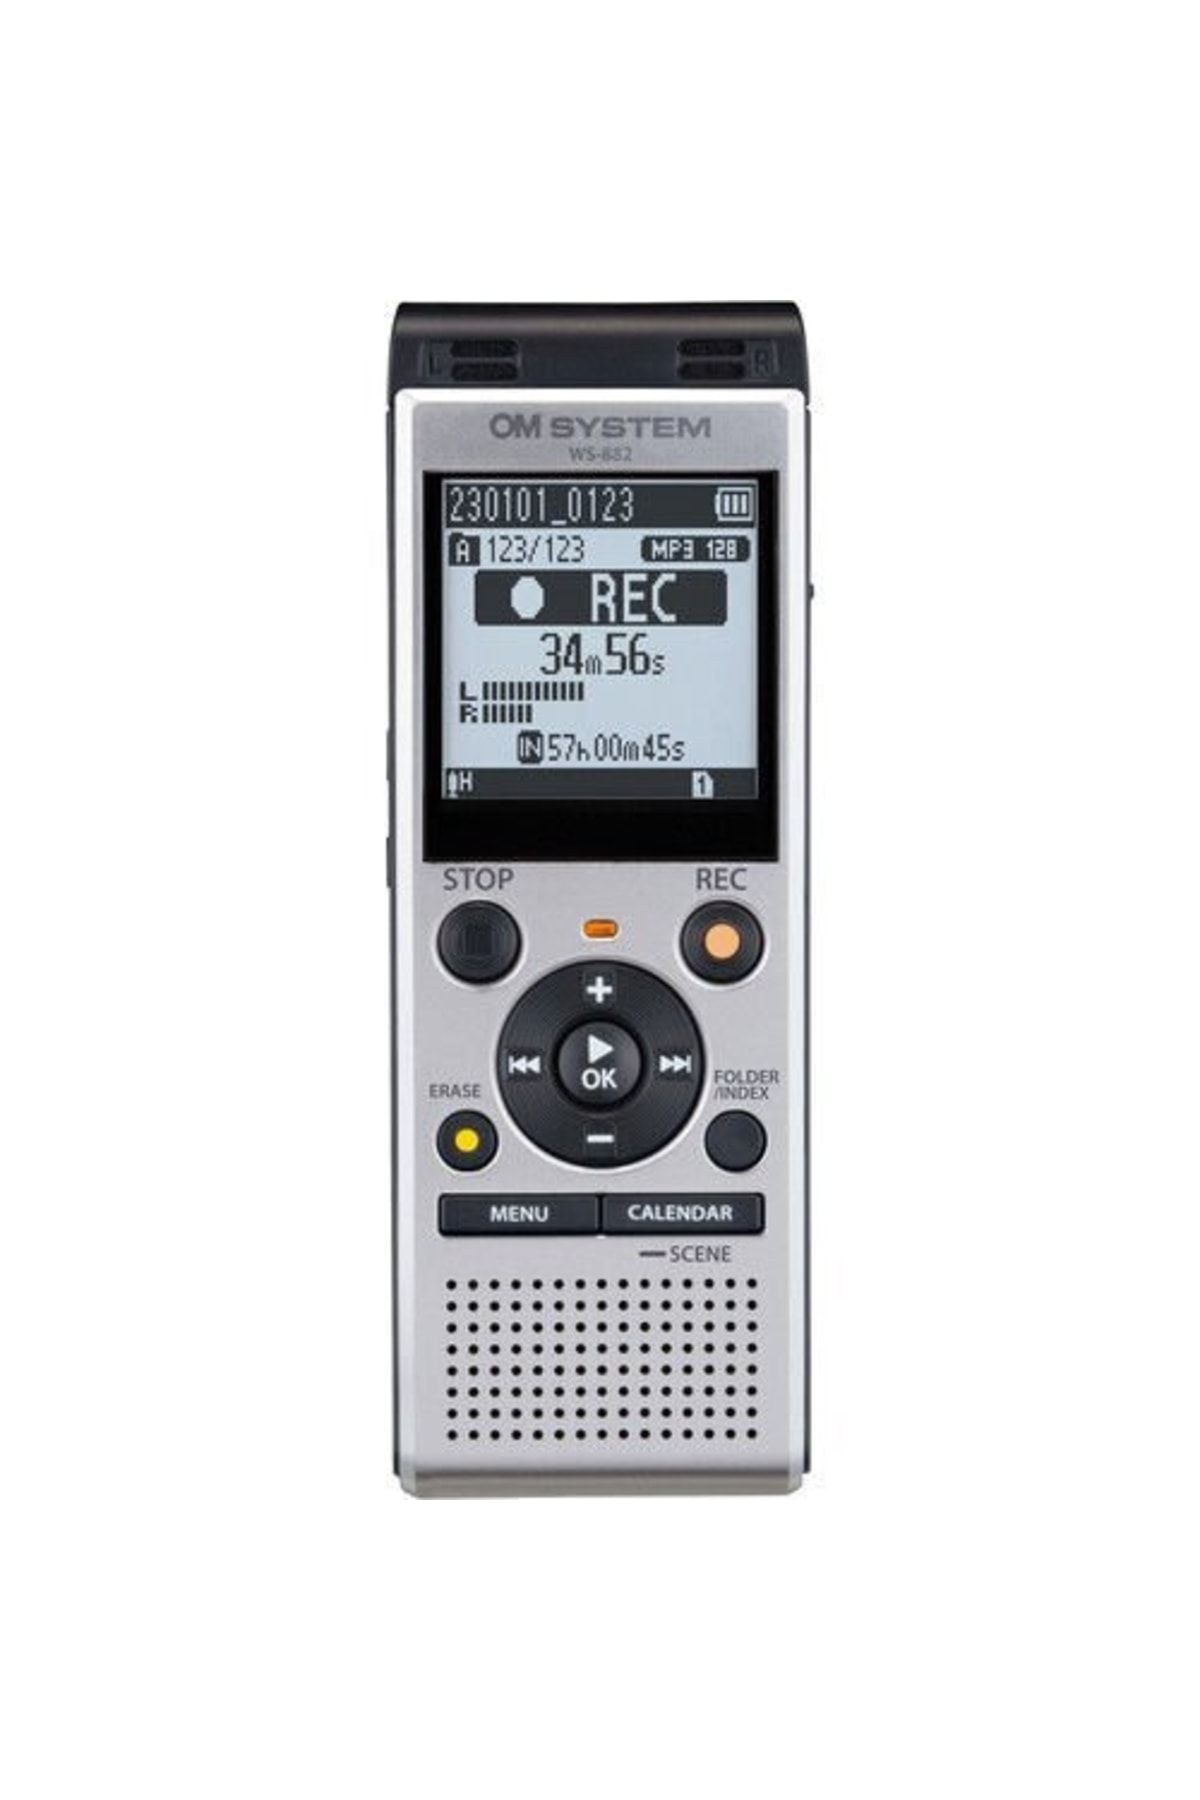 OM System Ws-882 Dijital Ses Kayıt Cihazı